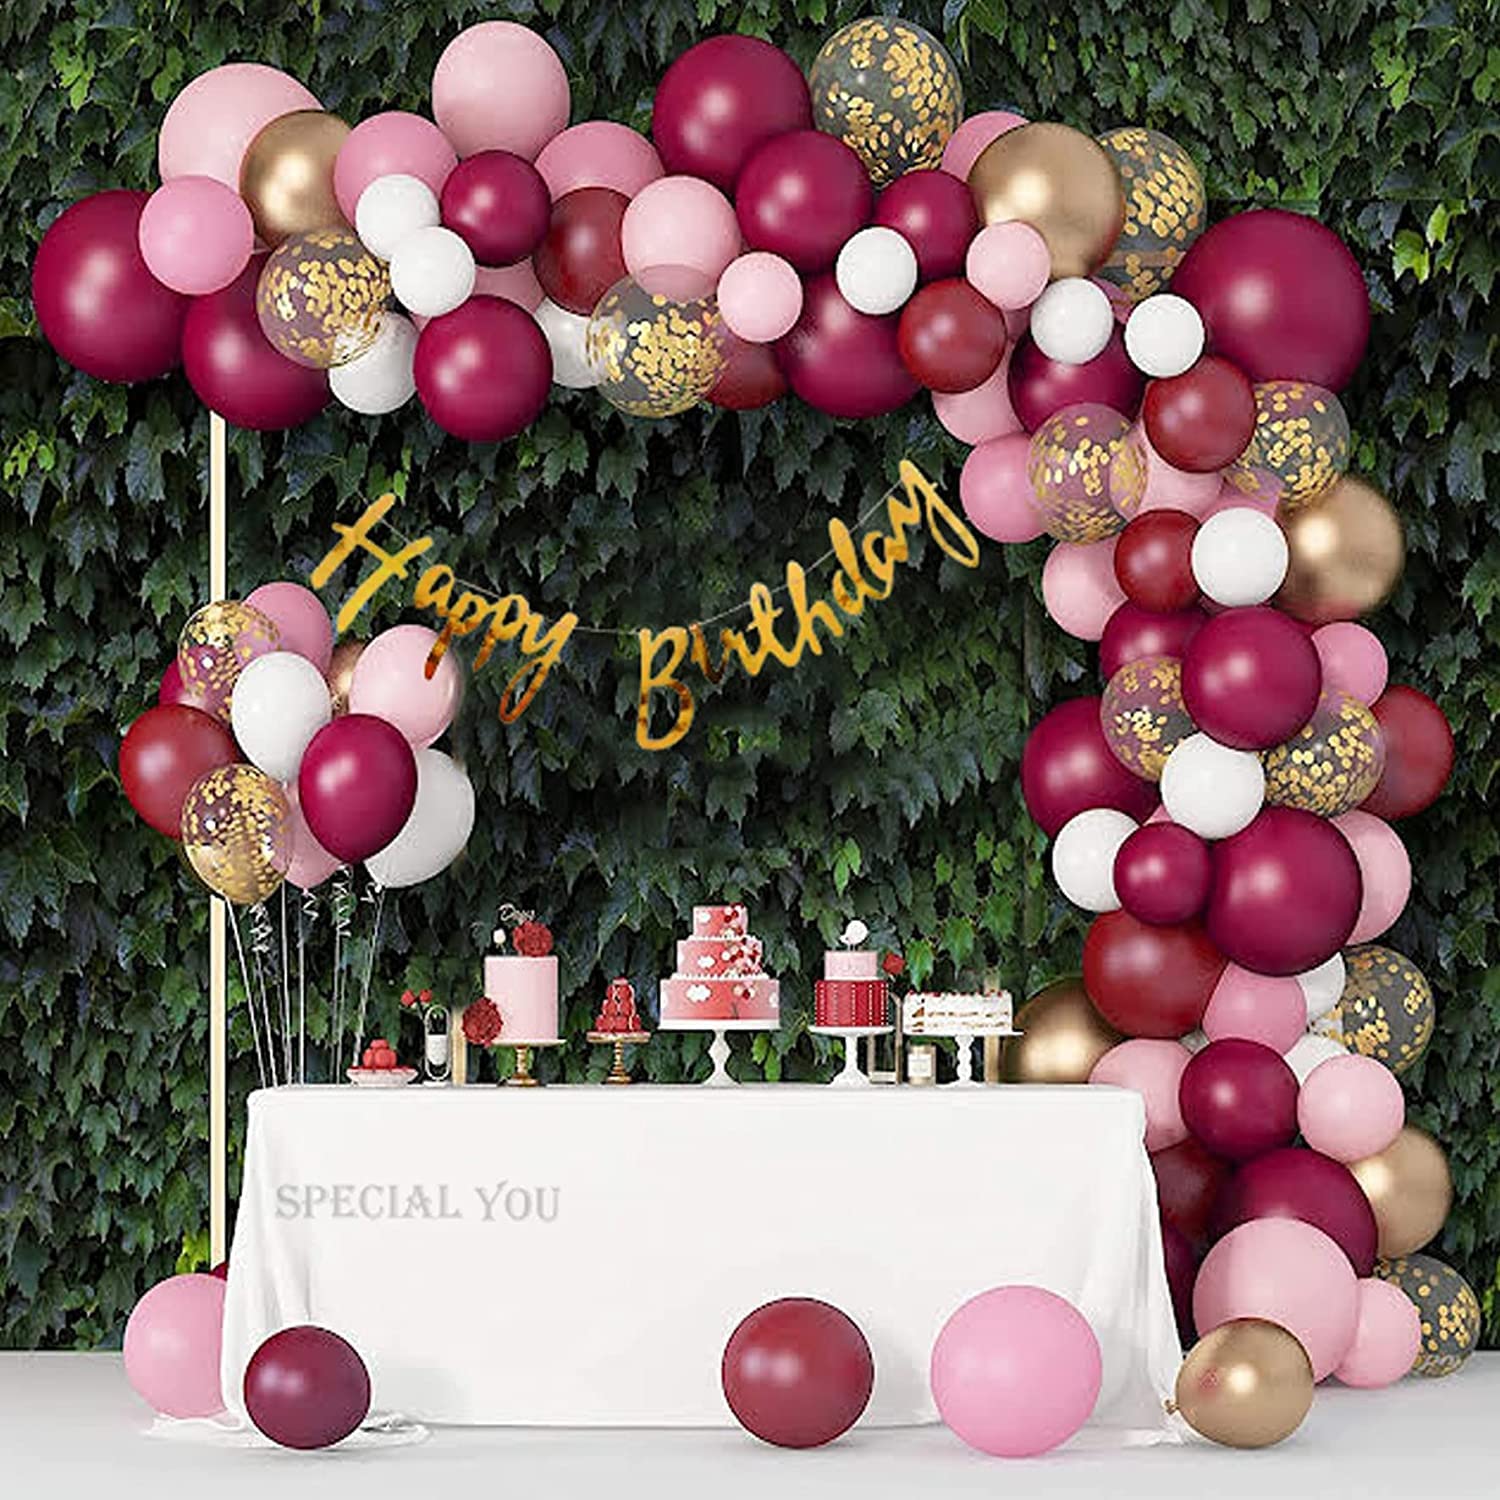 Burgundy Pink Balloons decoration